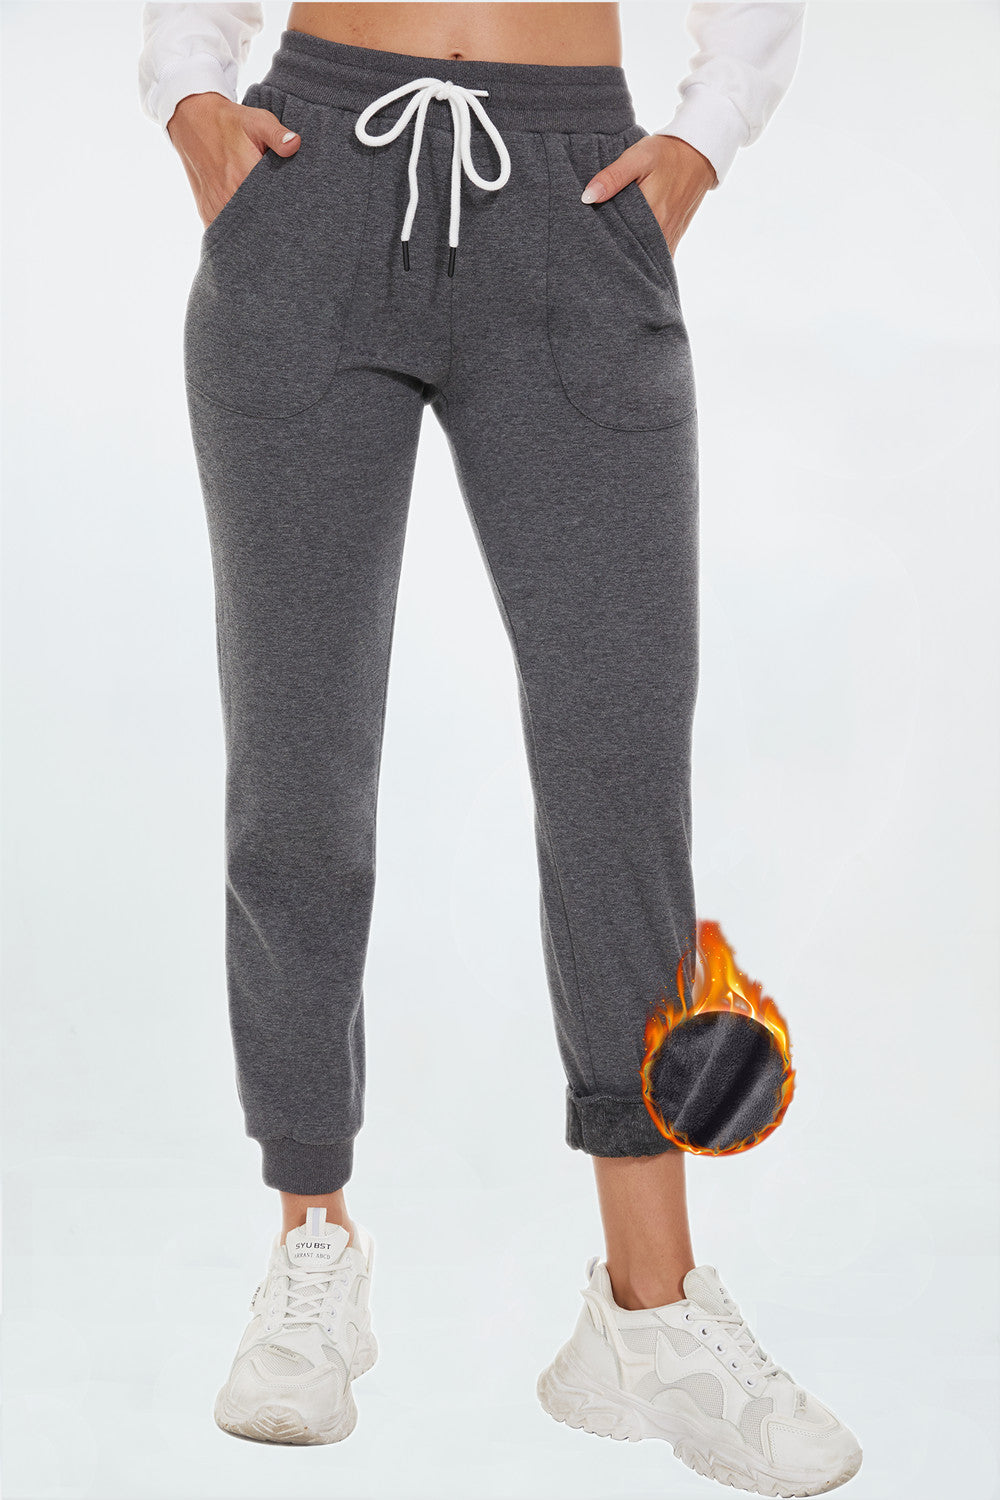 Fleece Lined Sweatpants for Women Winter Warm Joggers with Pockets – PULI